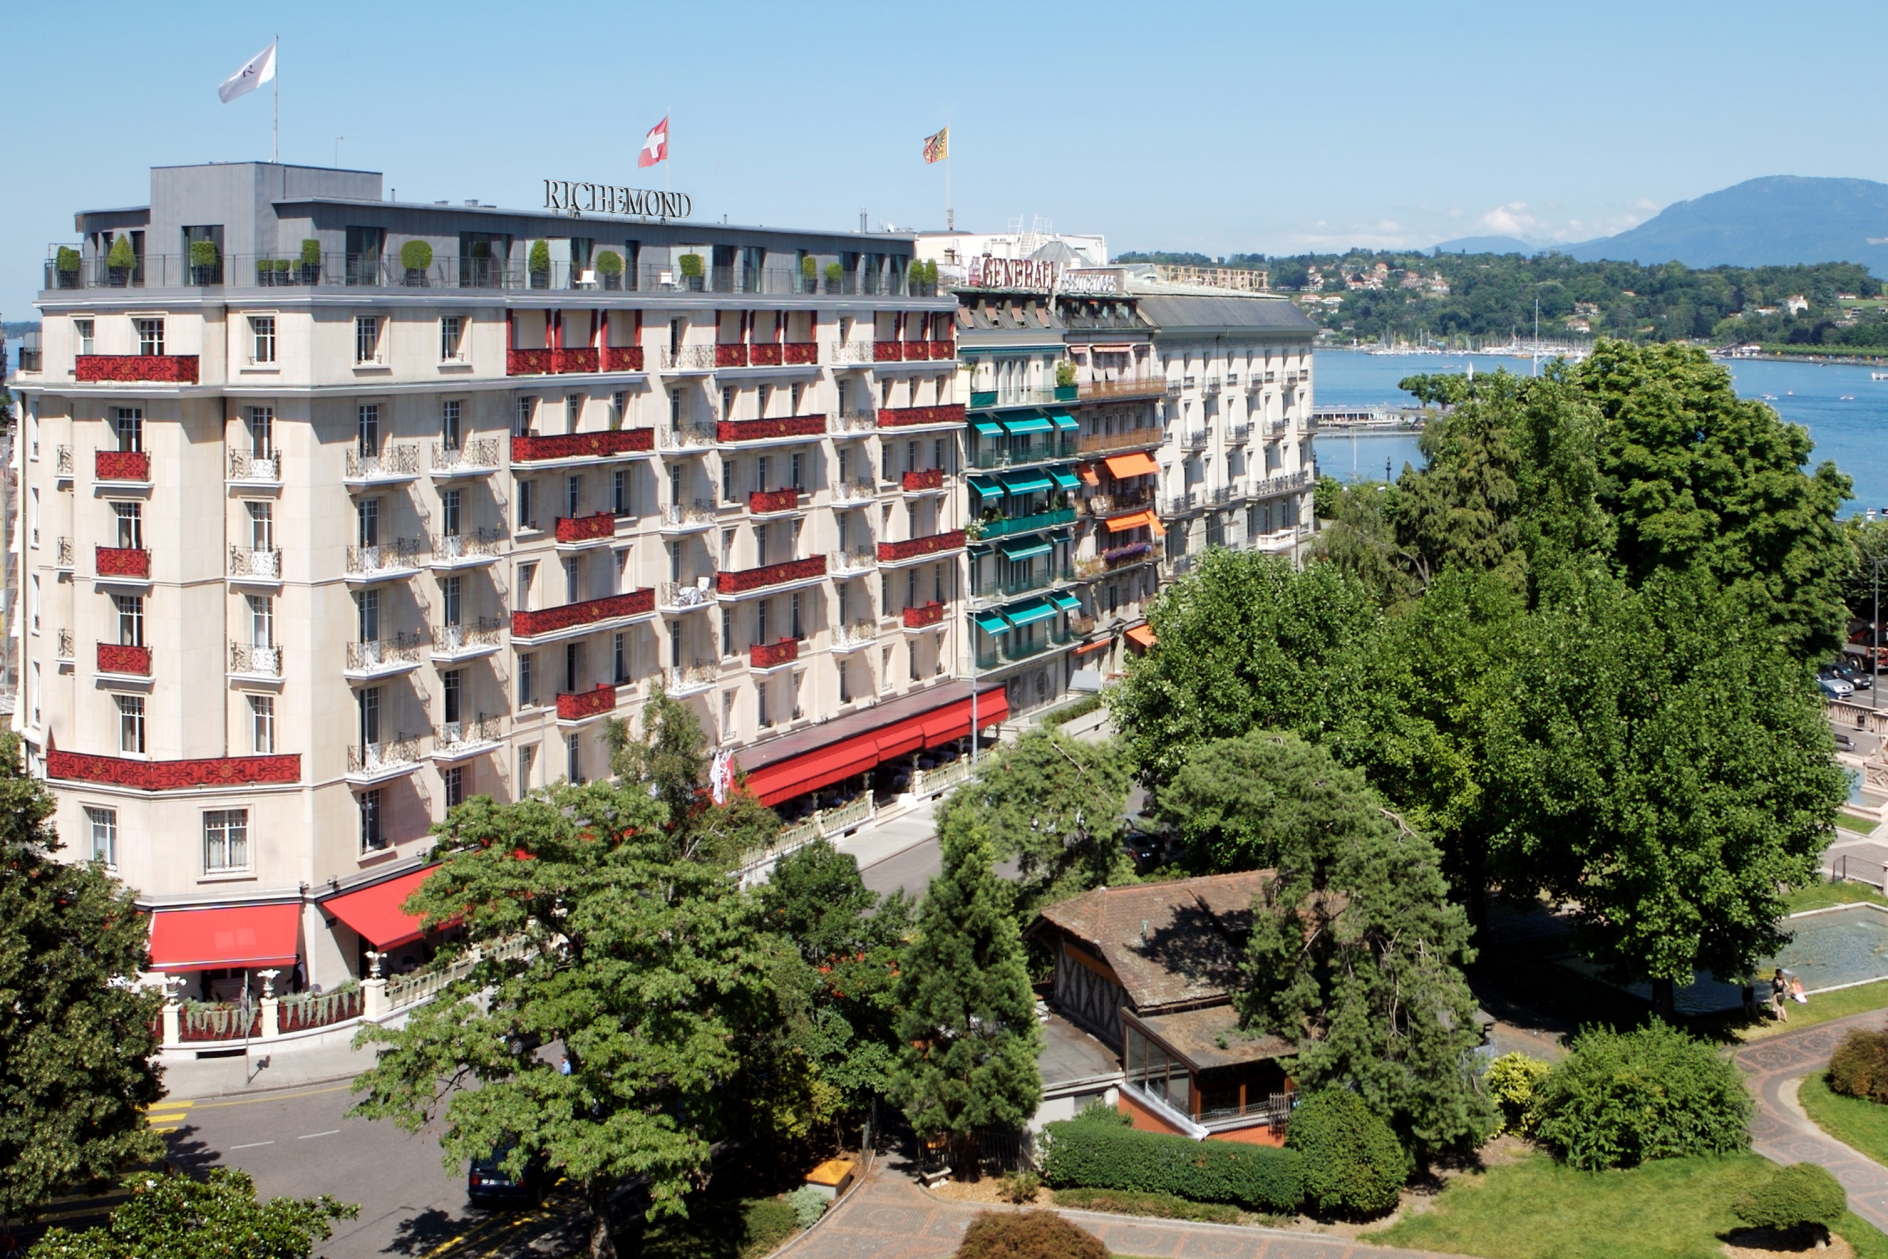 Le Richemond Hote in Geneva, Switzerland. Click to enlarge.